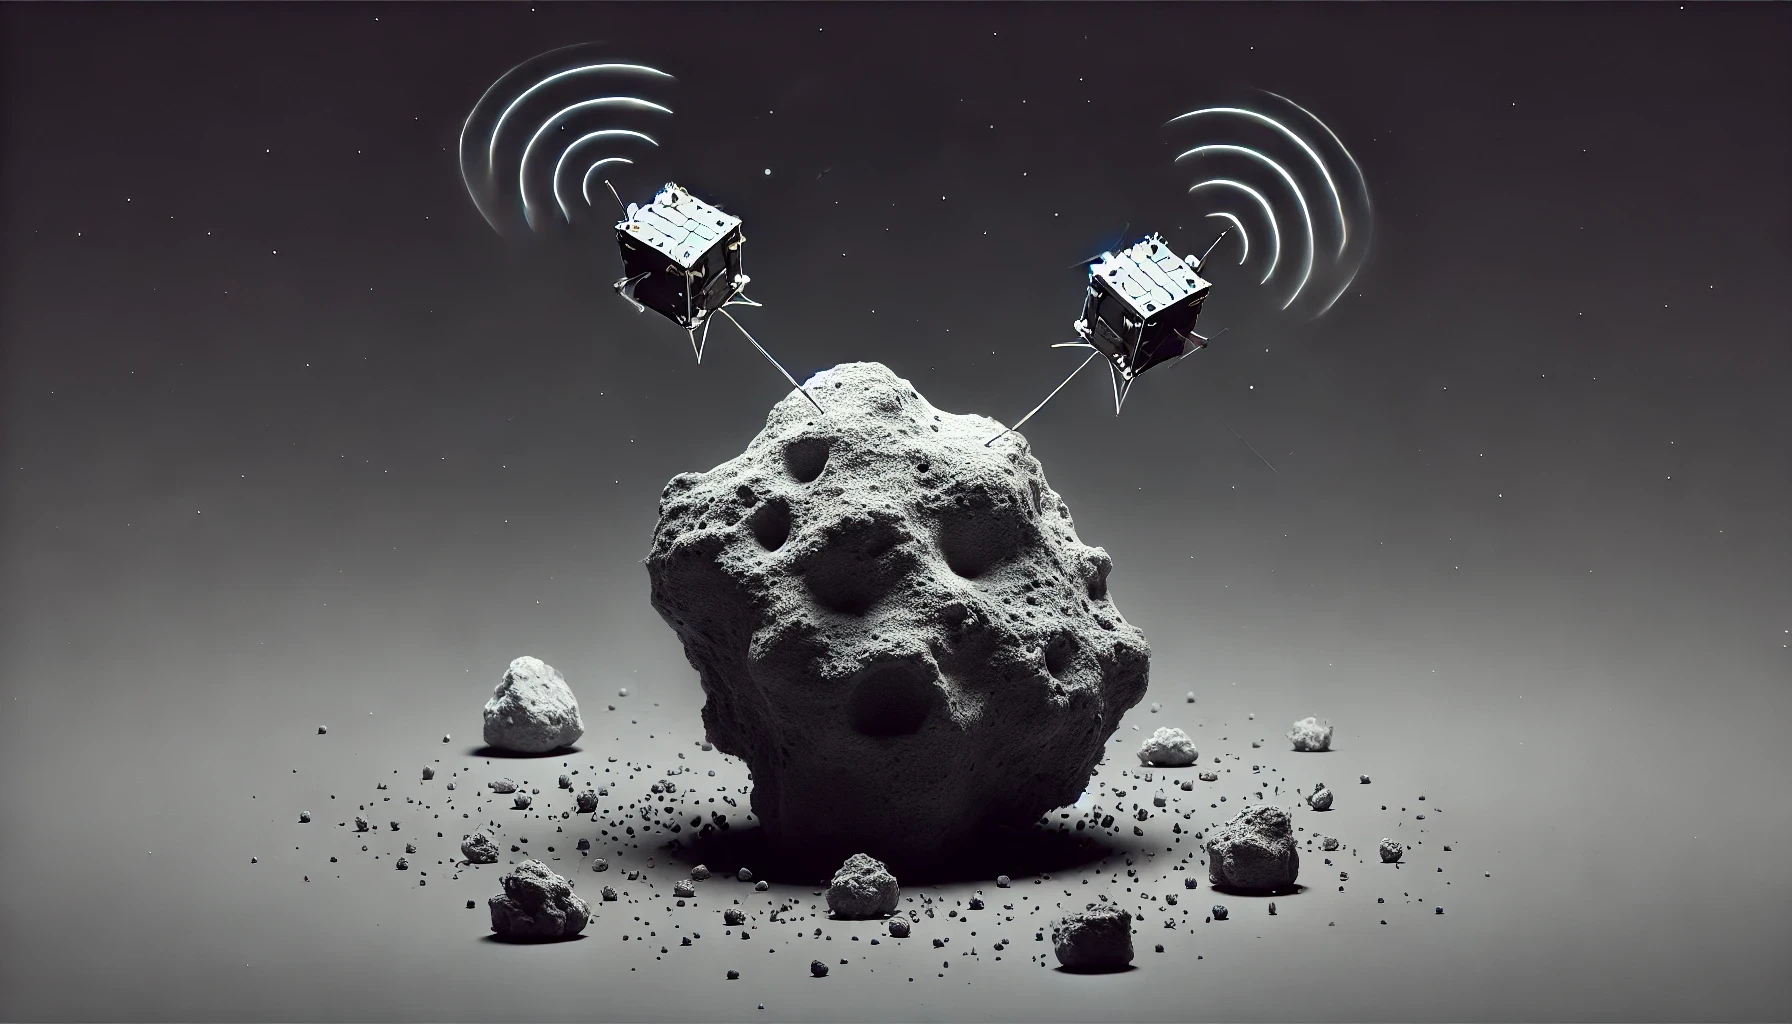 Par CubeSata uz pomoć radara mogao bi mapirati unutrašnjost asteroida blizu Zemlje